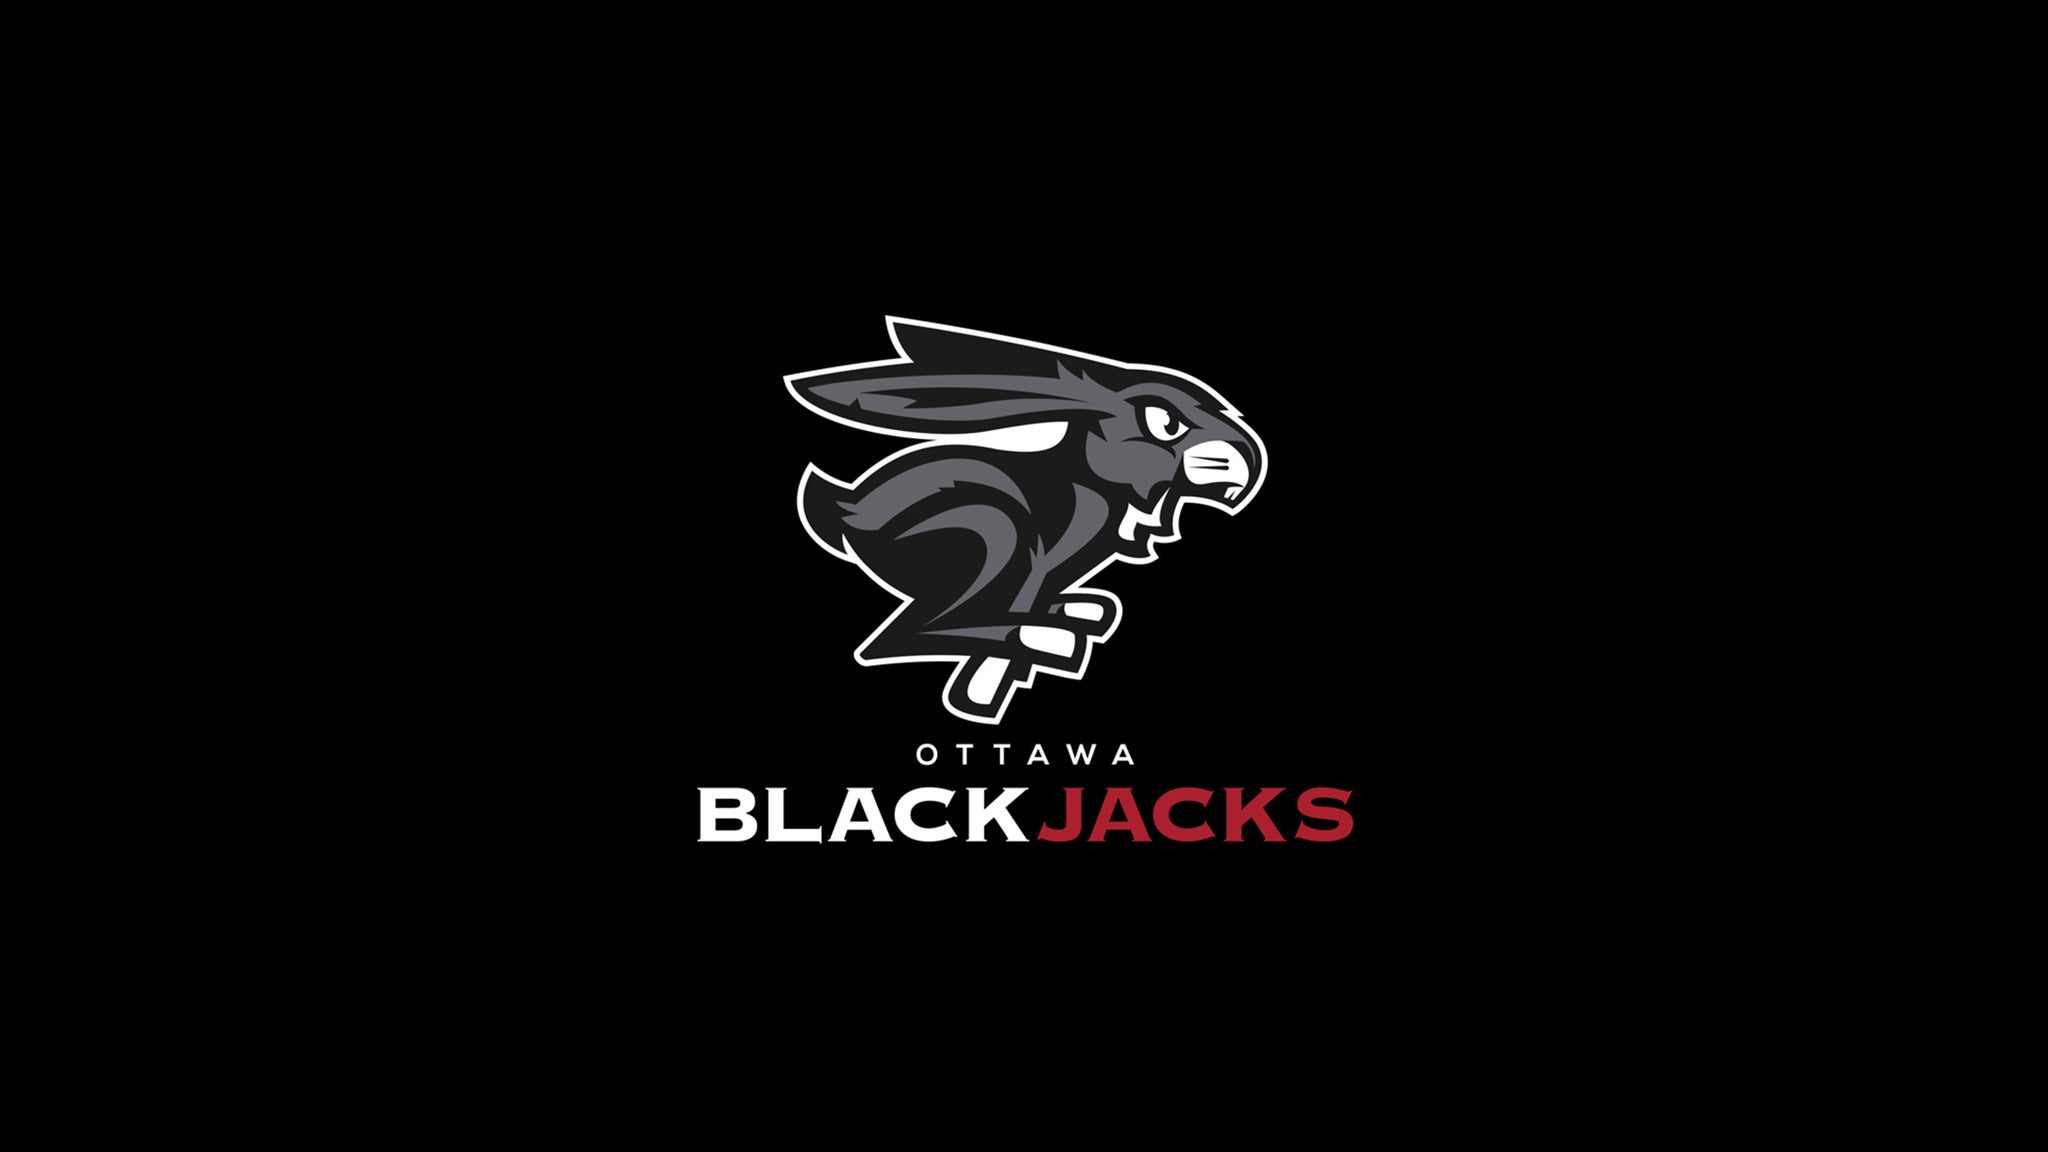 Ottawa BlackJacks vs. Montreal Alliance in Ottawa promo photo for Fan Zone  presale offer code